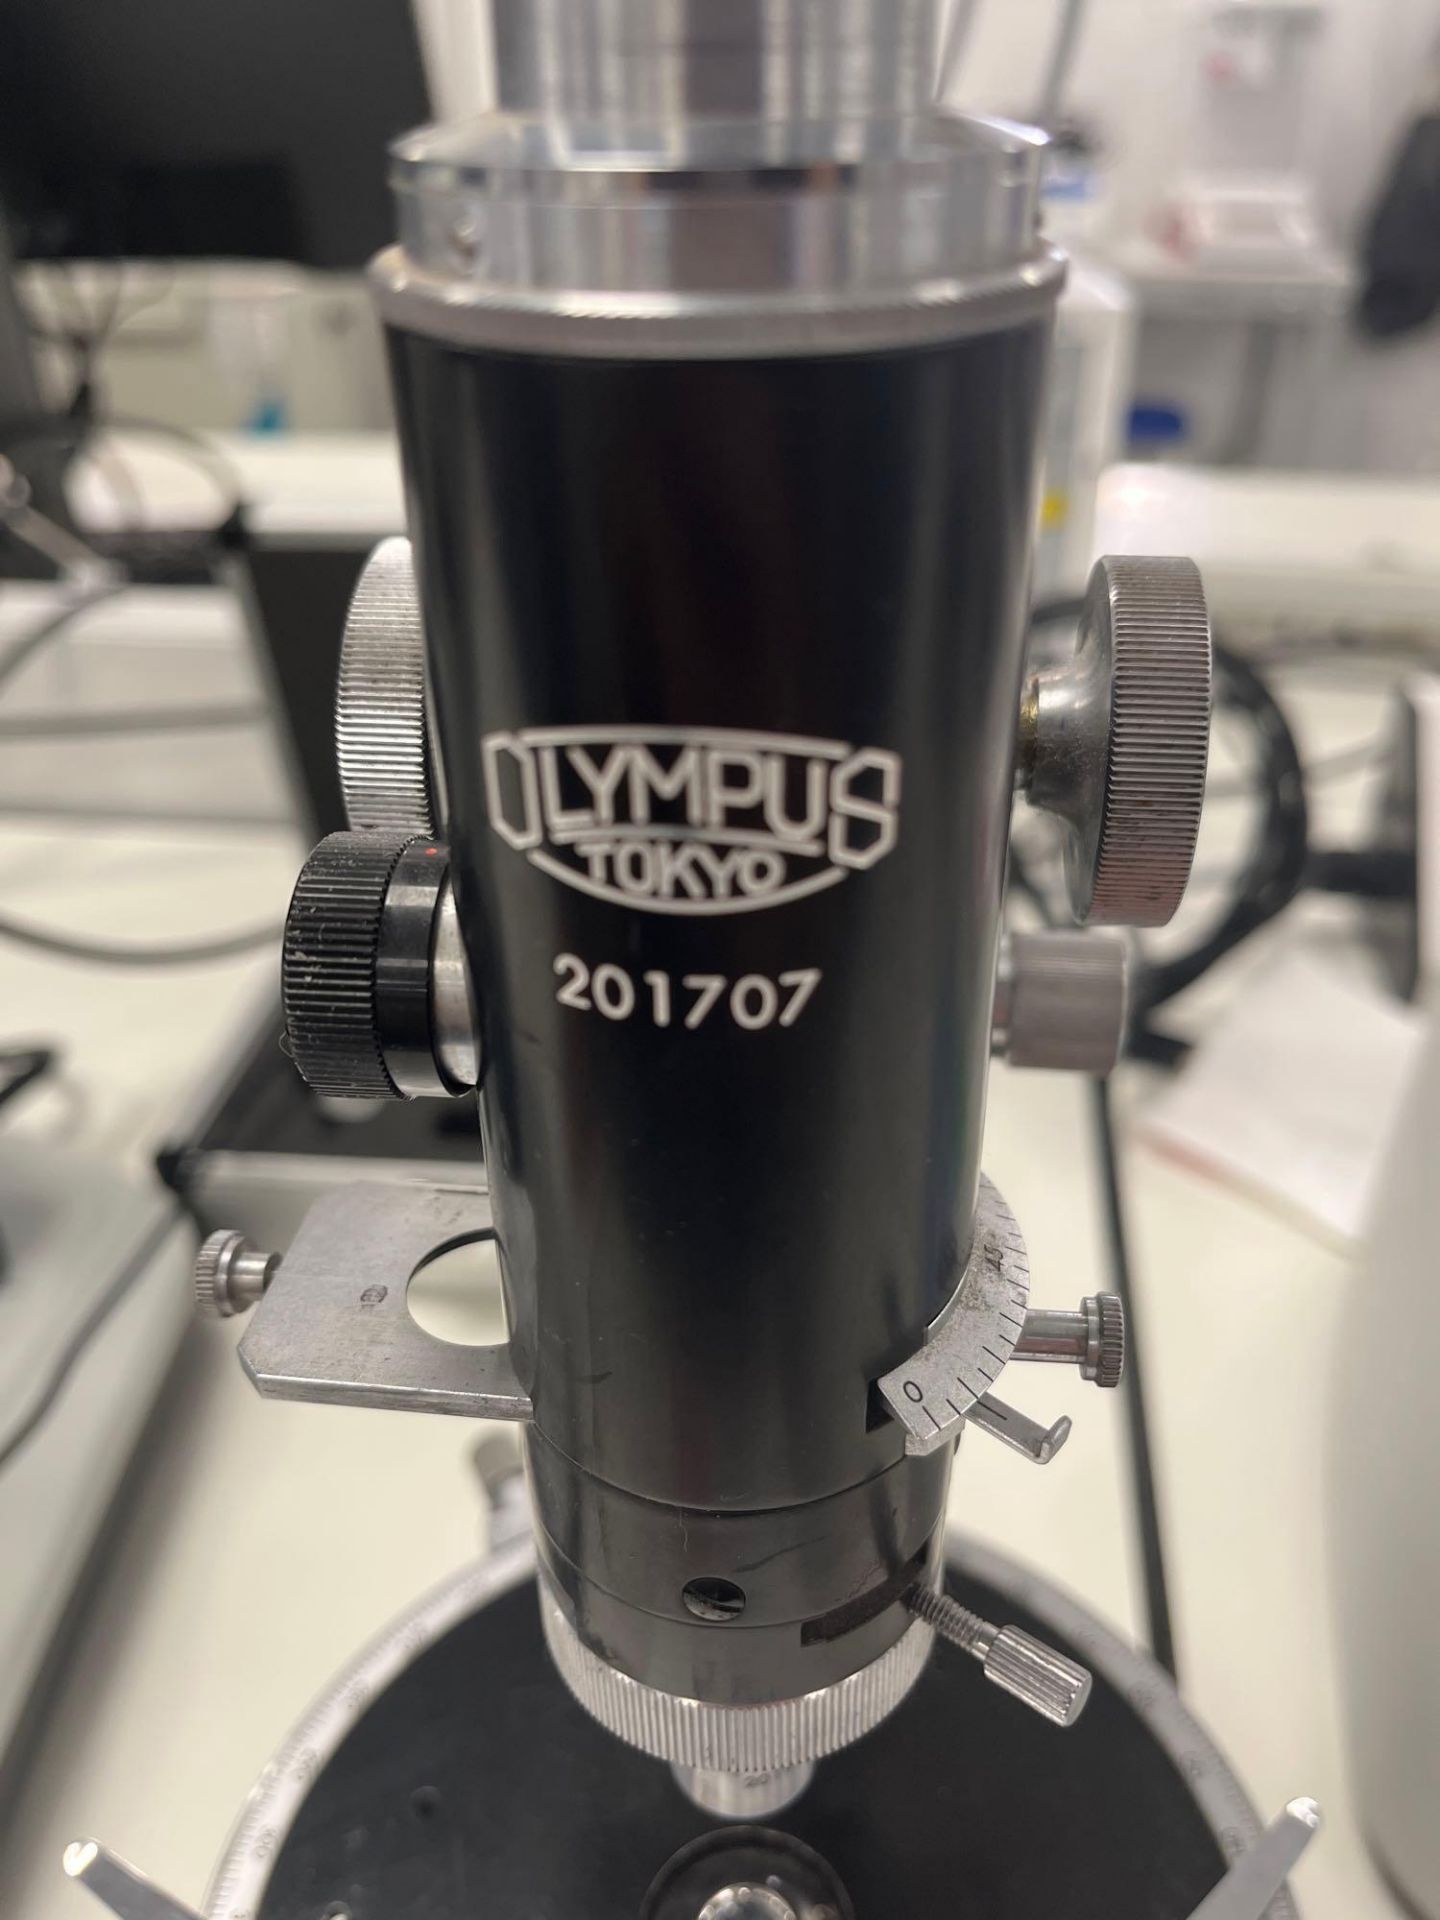 Olympus Tokyo 20170 microscope - Image 3 of 4